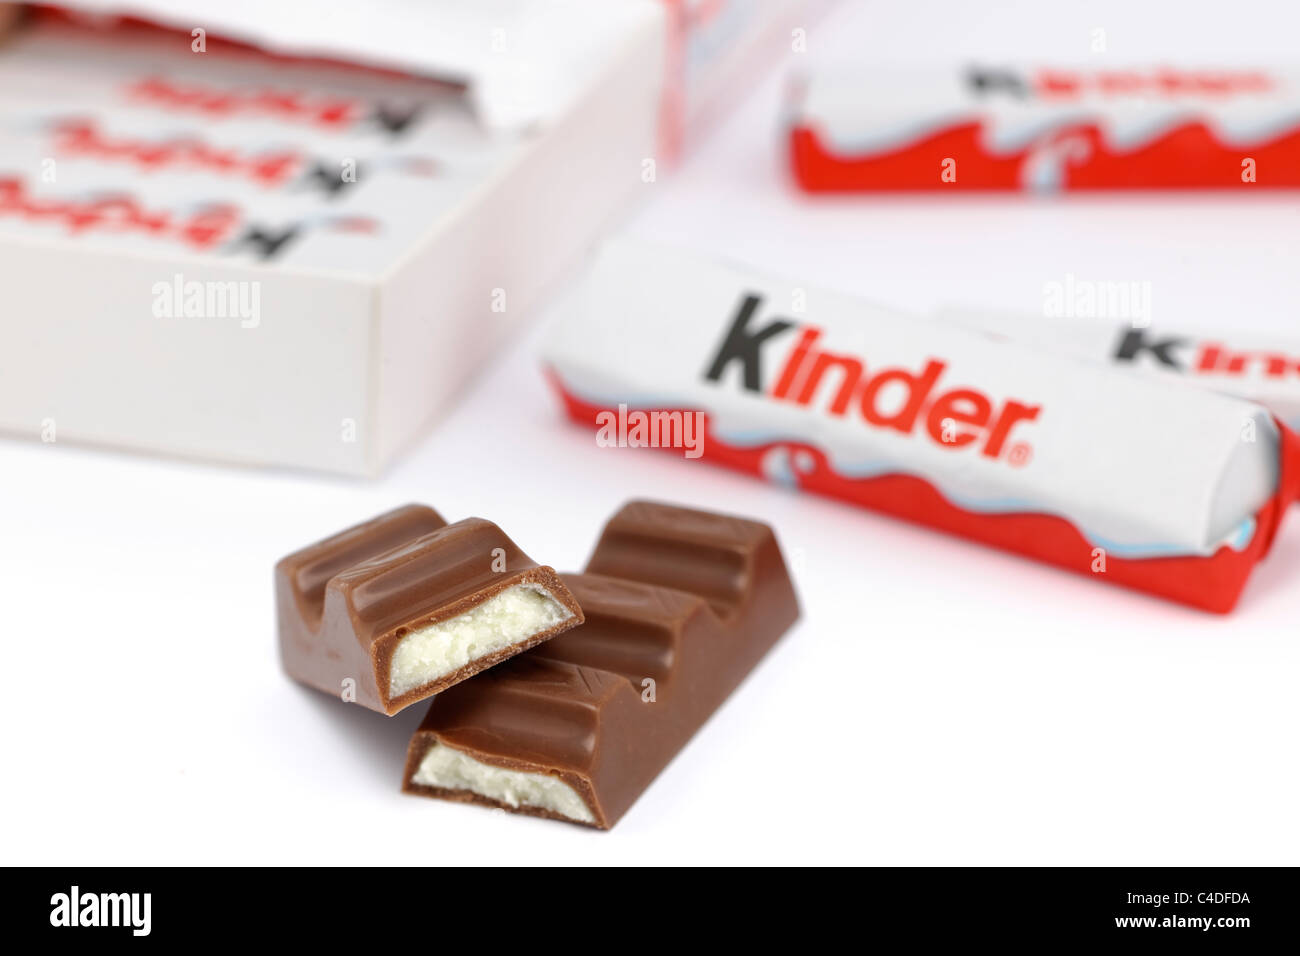 https://c8.alamy.com/comp/C4DFDA/kinder-mini-treats-chocolate-covered-cream-bars-C4DFDA.jpg